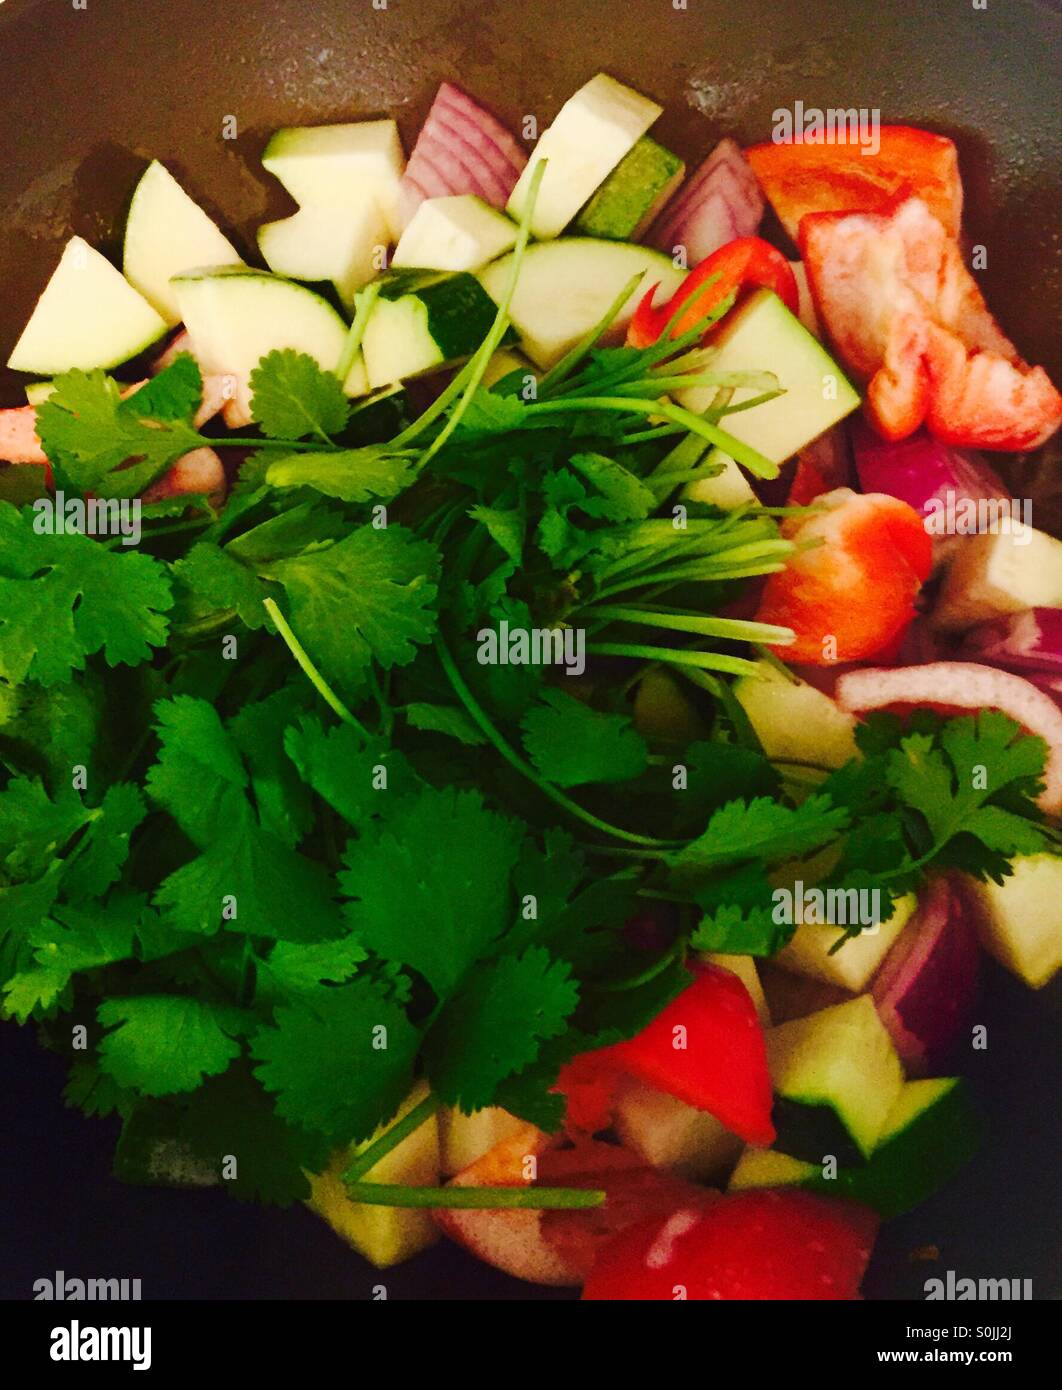 Cooking veggies Stock Photo